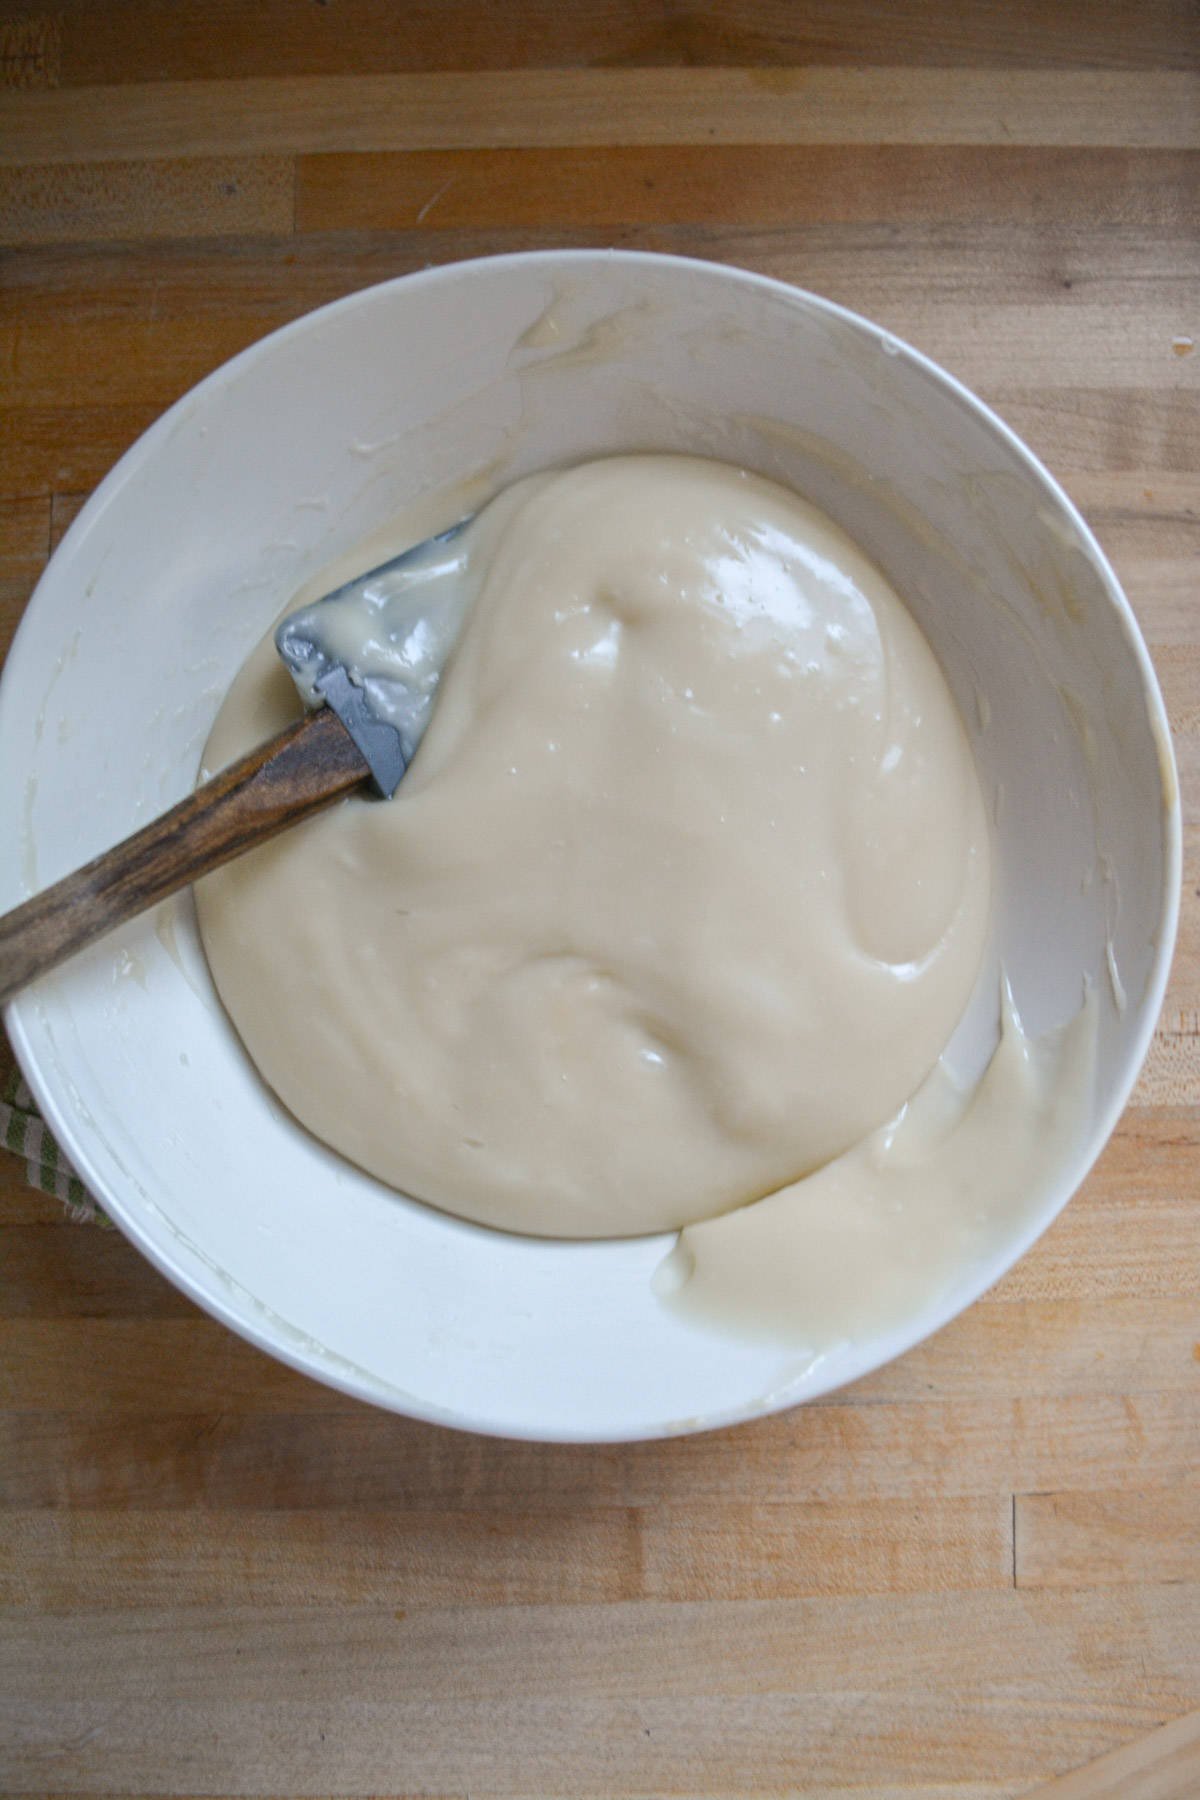 Vanilla stirred into the custard.